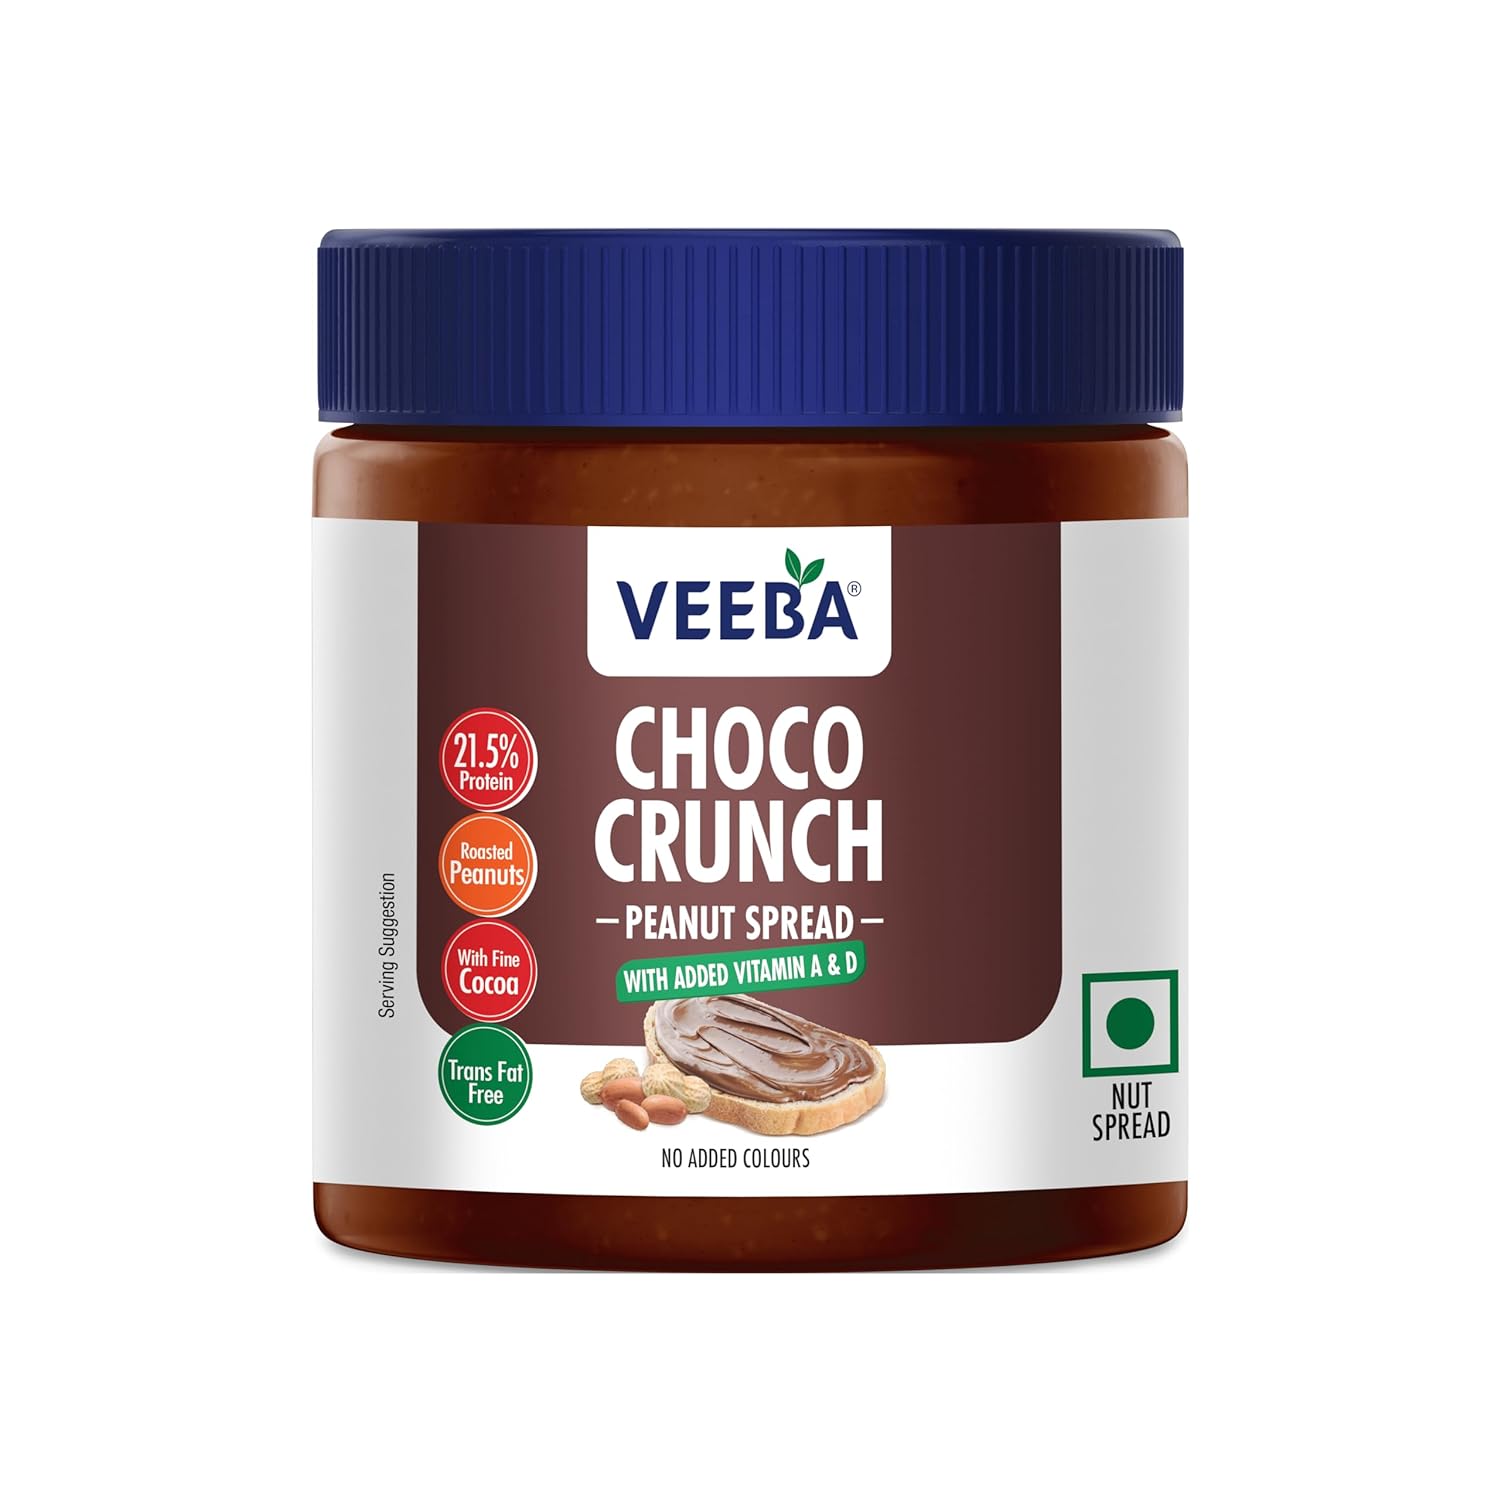 VEEBA Choco Peanut Spread Crunchy Jar, 340 g